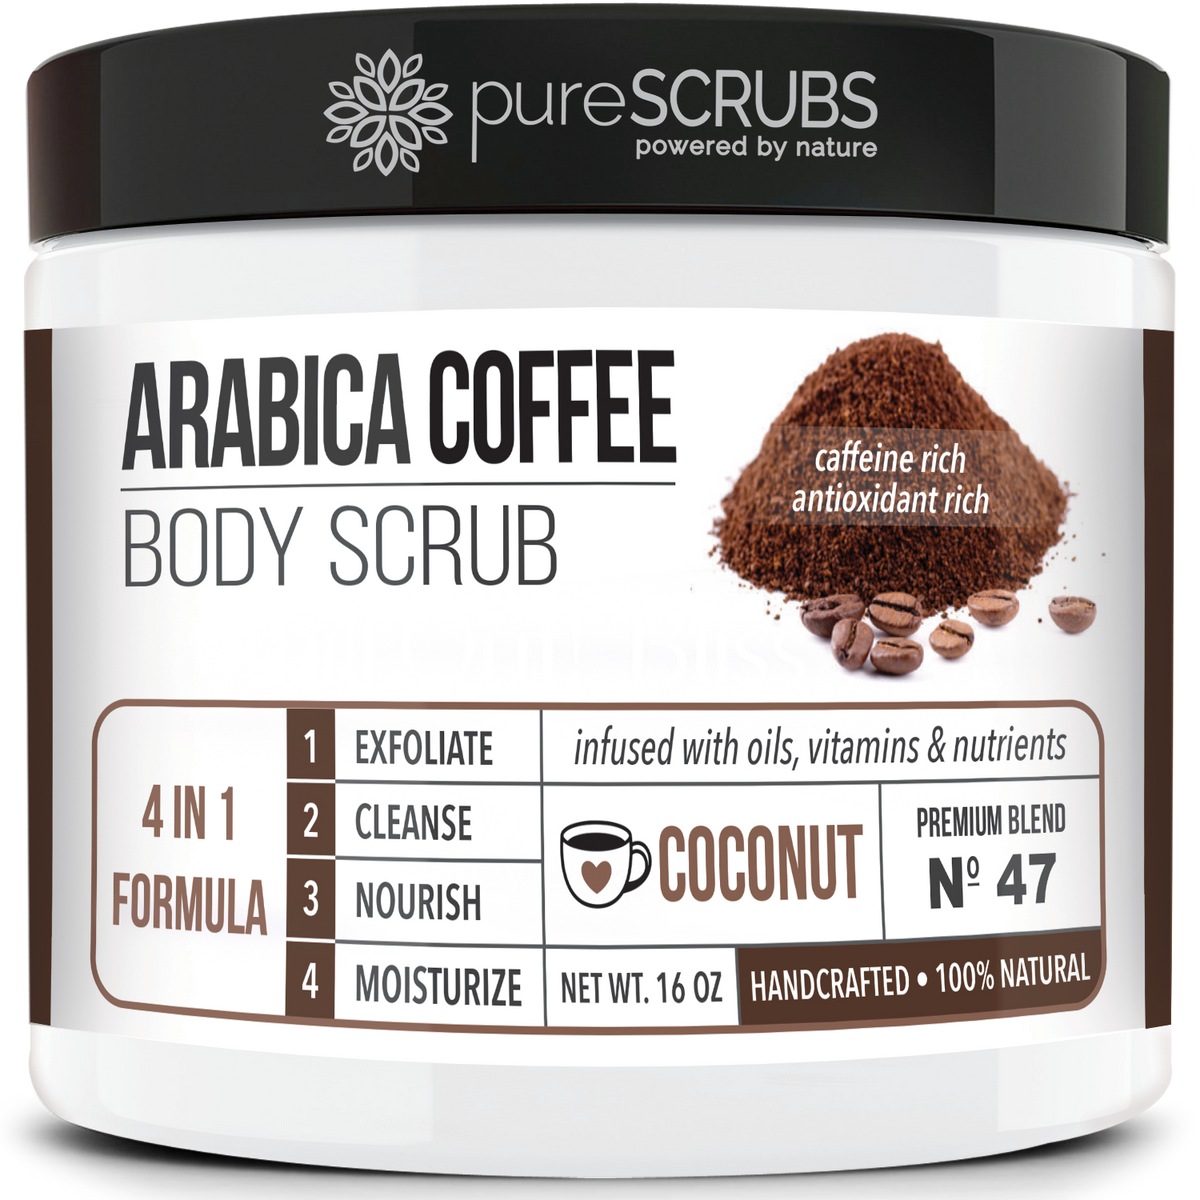 Coconut Body Scrub / Arabica Coffee / Premium Blend #47